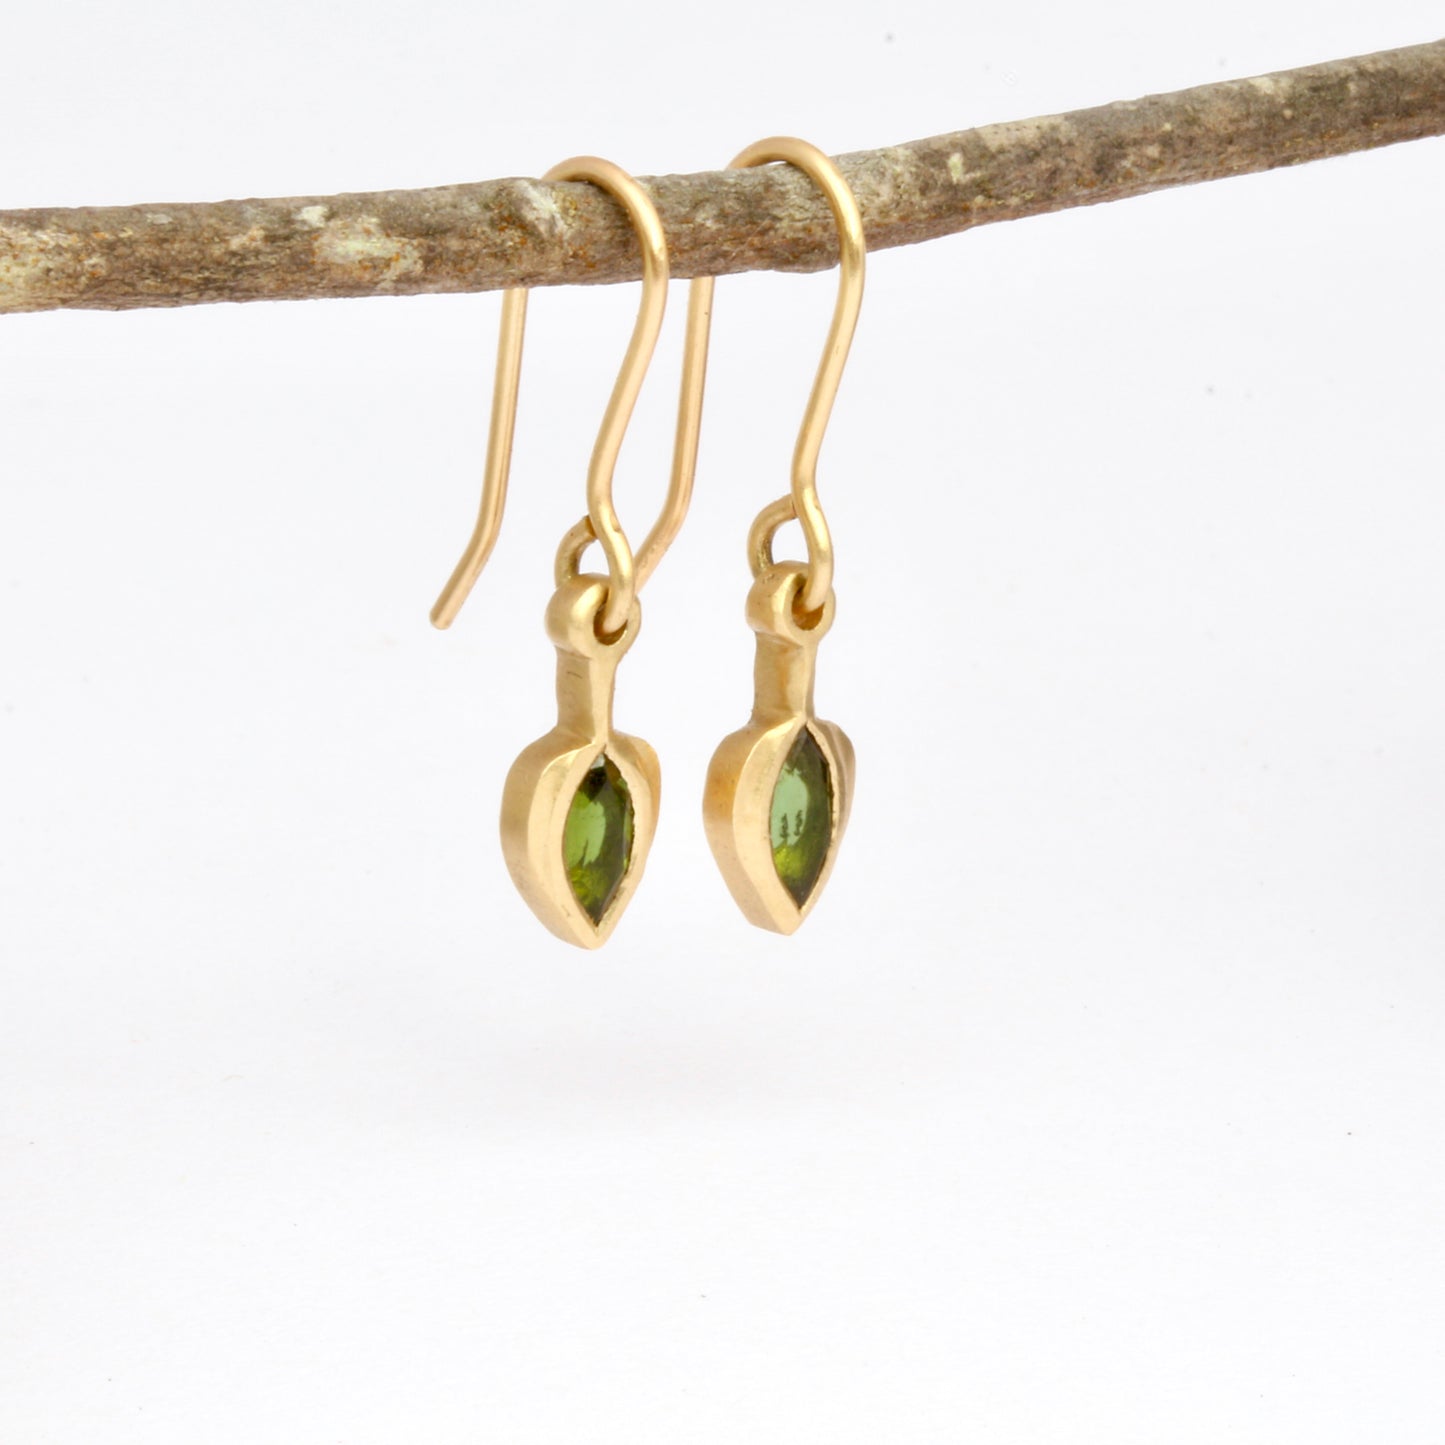 Green tourmaline & solid gold drop earrings